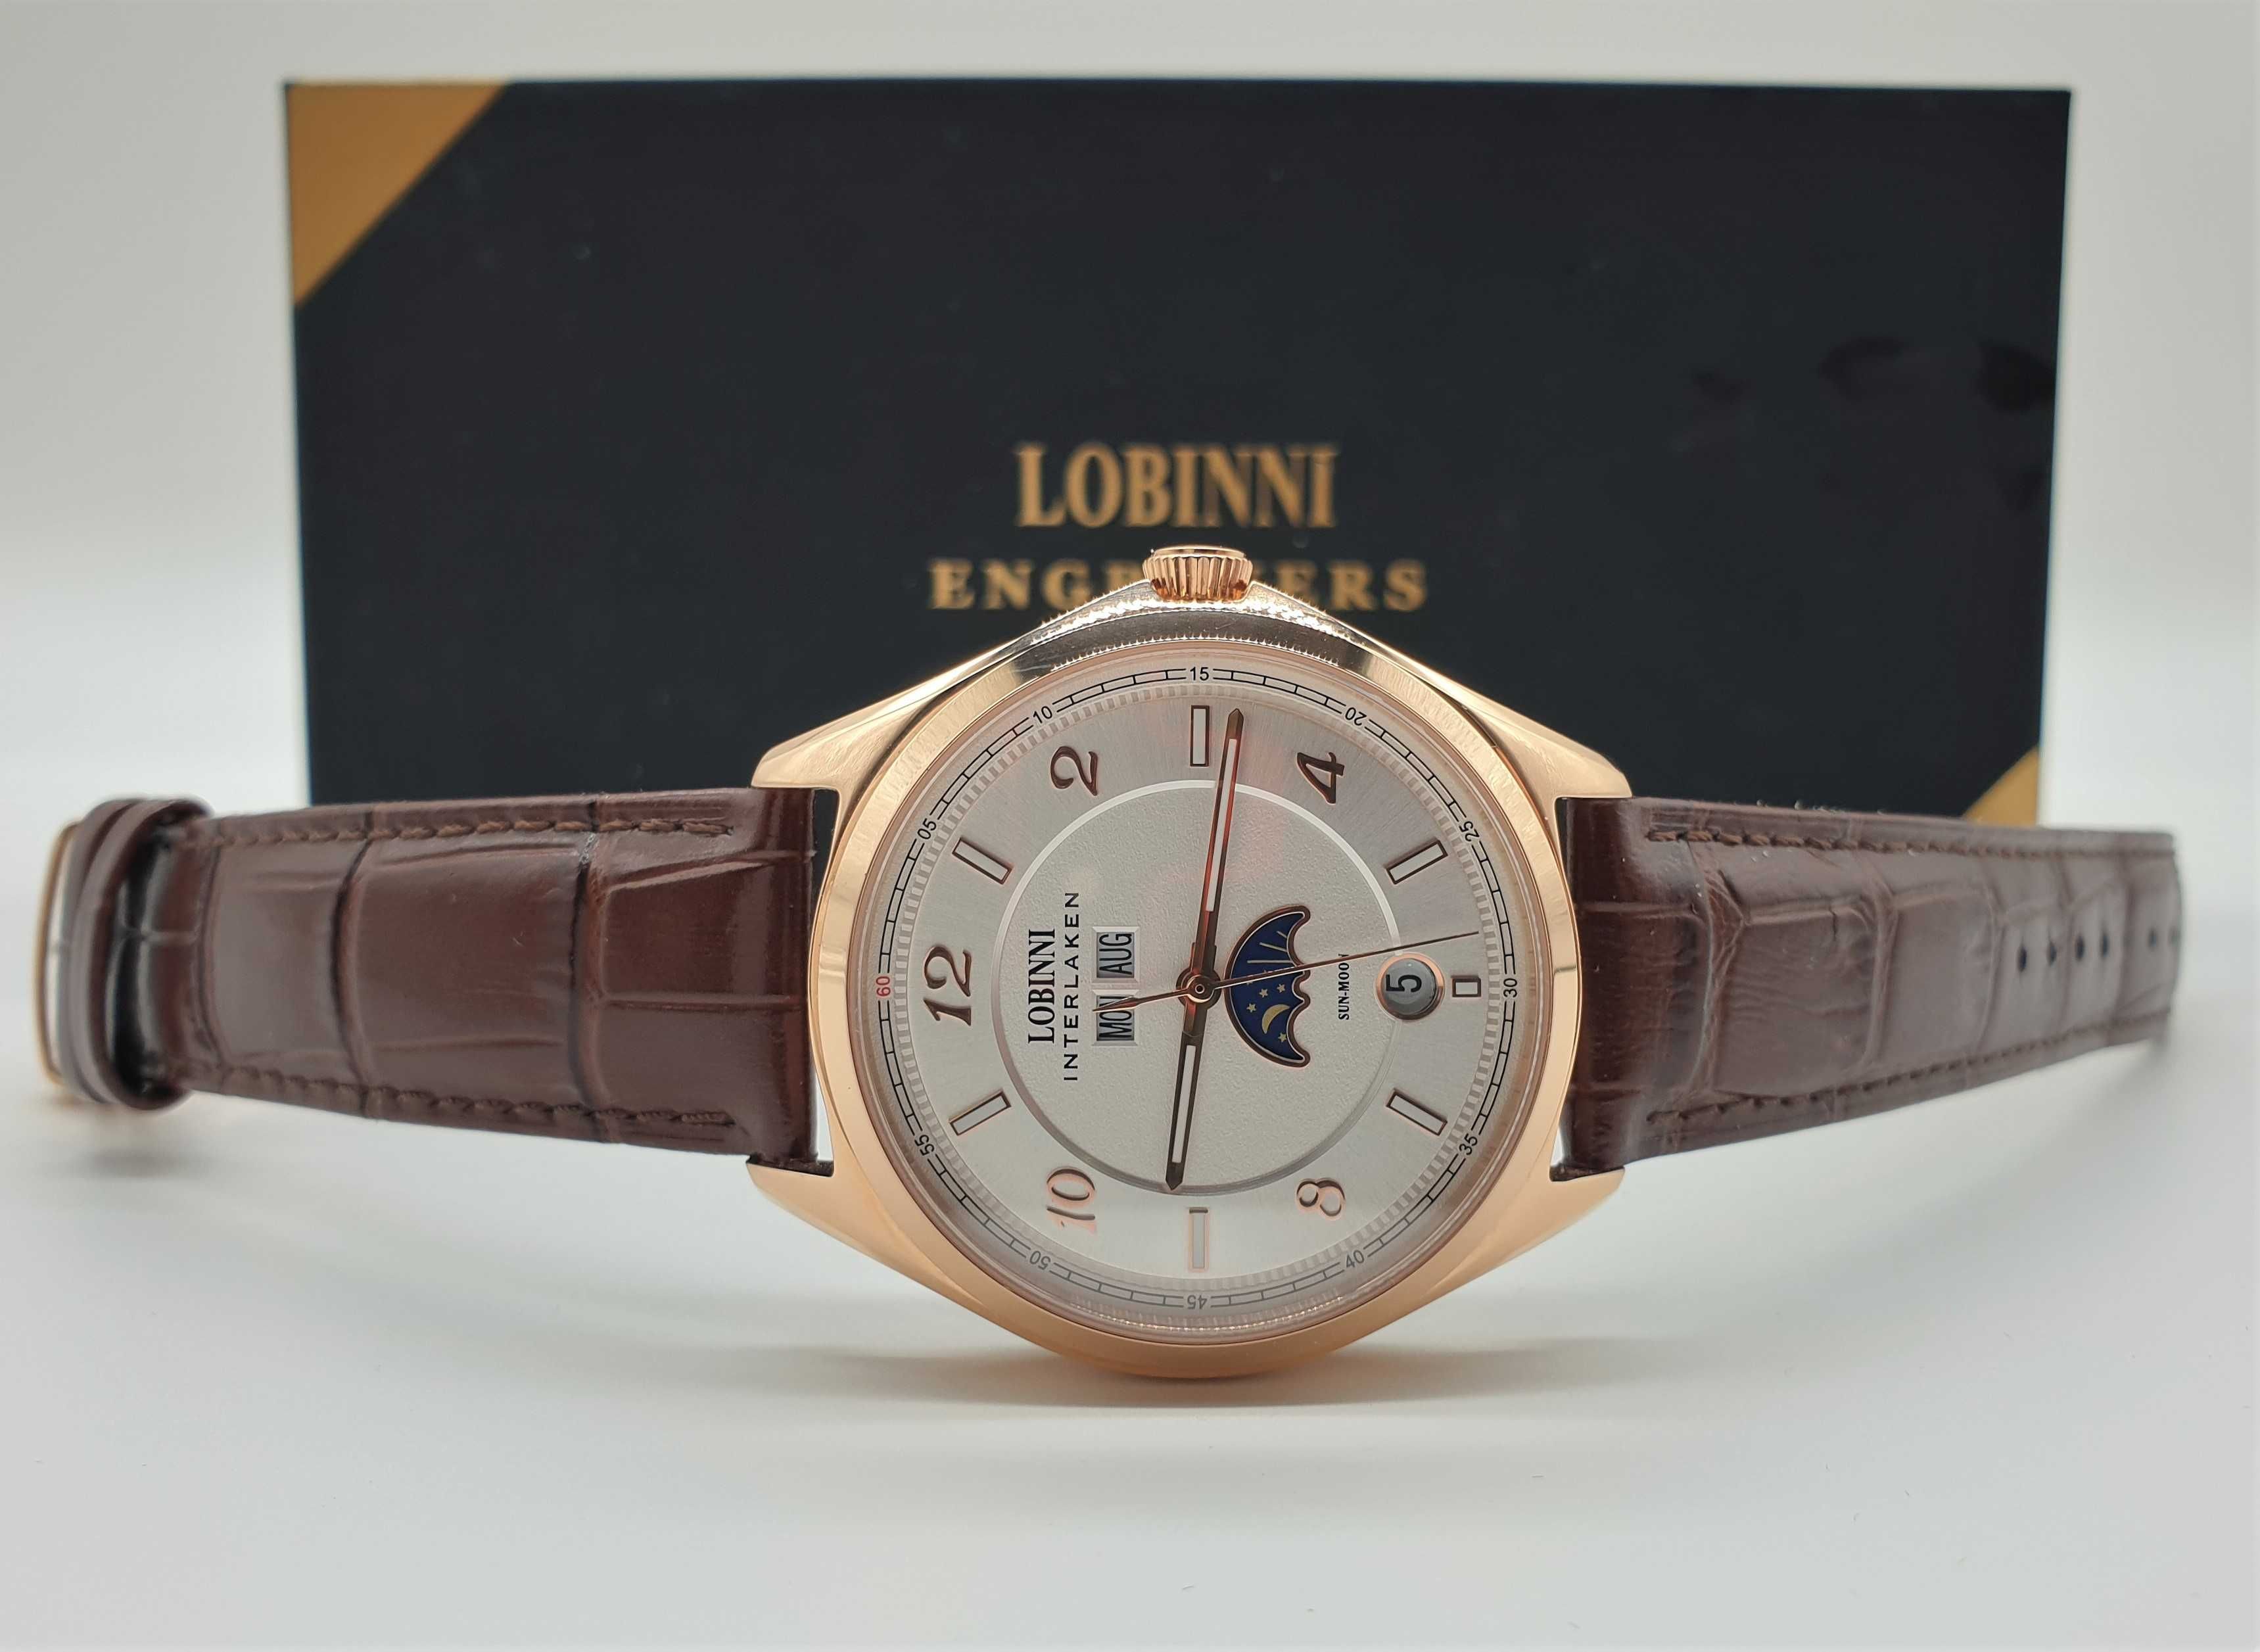 Чоловічий годинник часы Lobinni Interlaken Automatic Sapphire 40mm